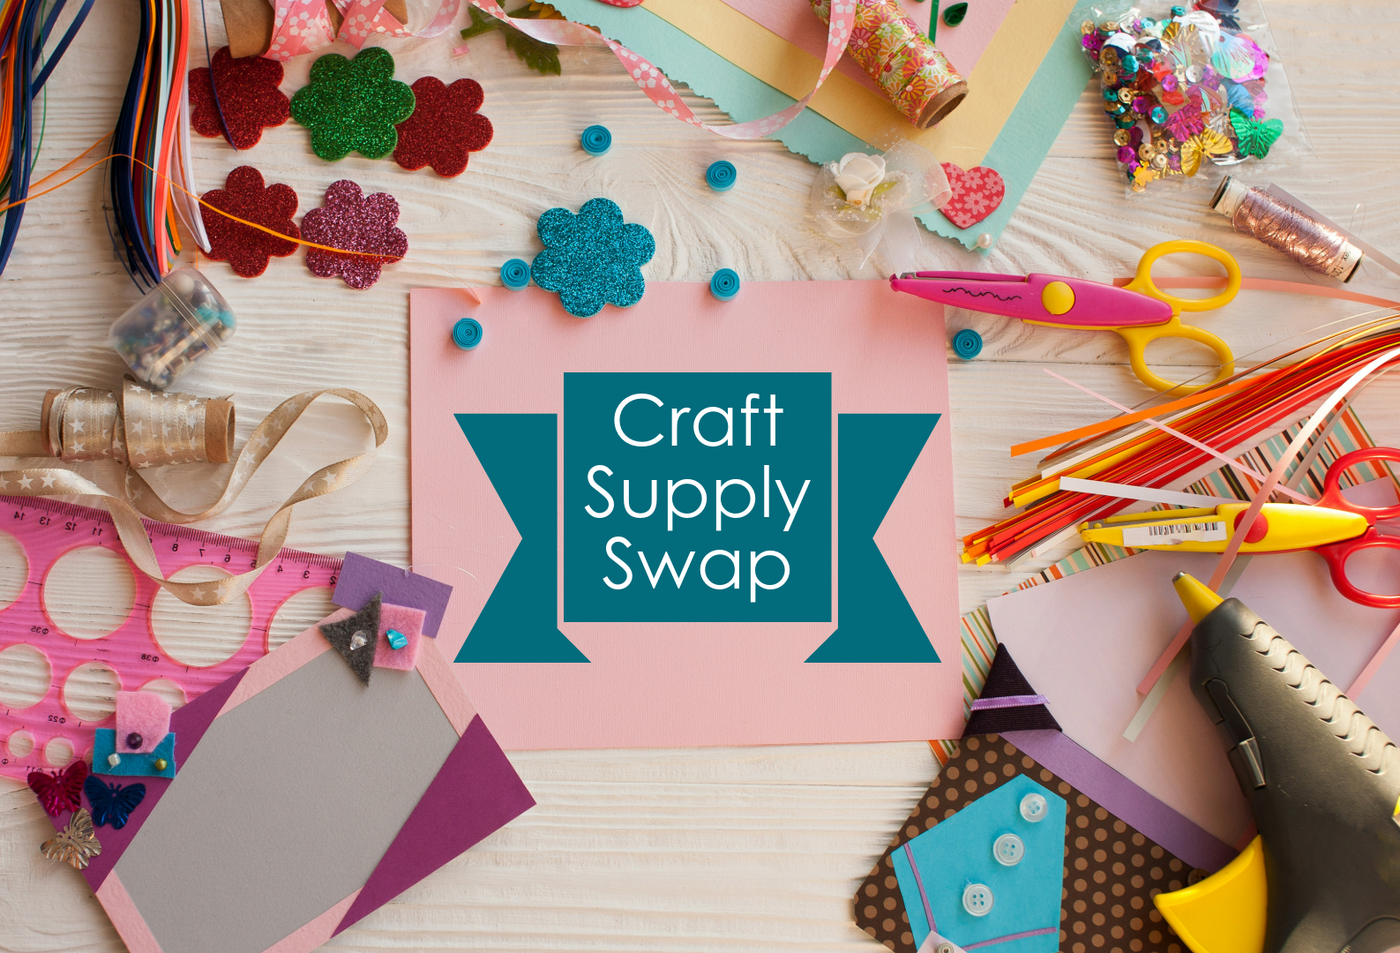 Craft Supply Swap 5/26 2-4pm